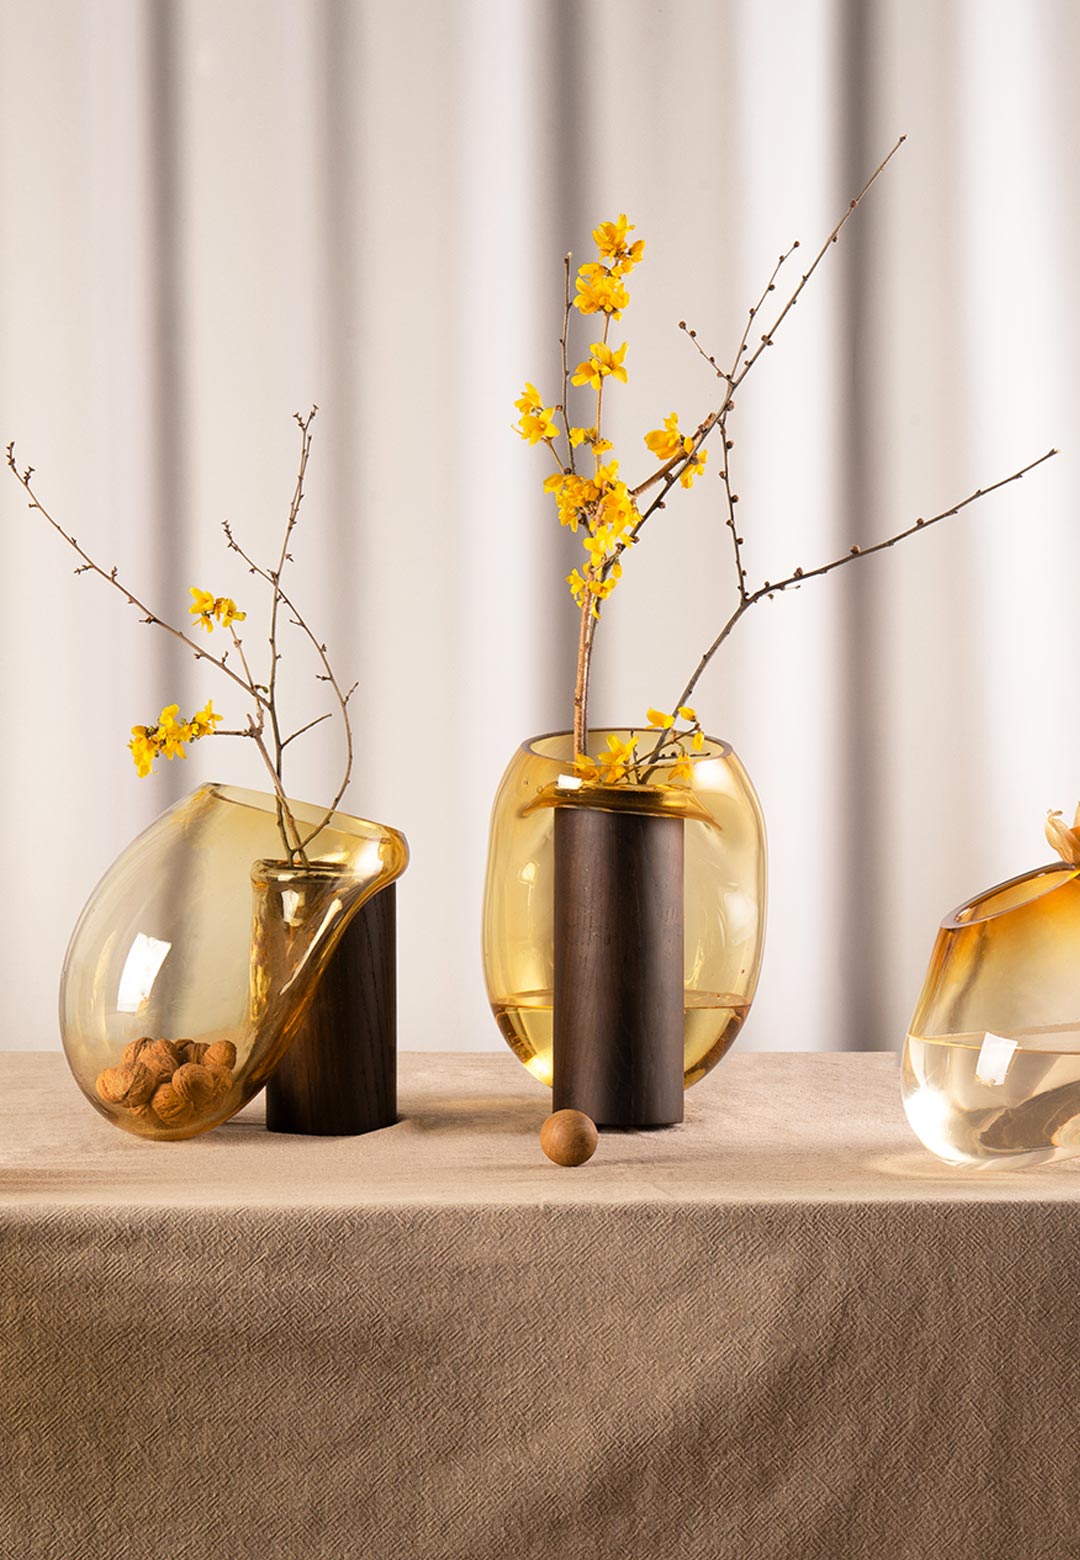 Kateryna Sokolova celebrates Ukrainian glass blowing with ‘Gutta’ vase collection